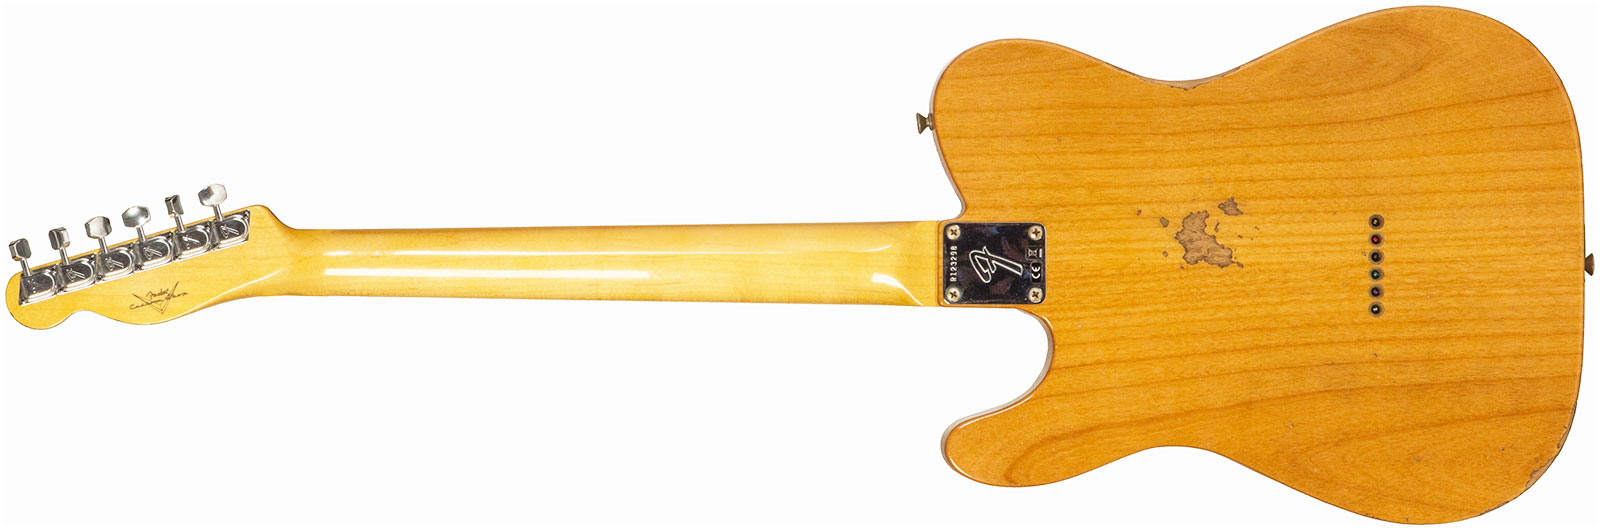 Fender Custom Shop Tele 1968 2s Ht Mn #r123298 - Relic Aged Natural - Guitarra eléctrica con forma de tel - Variation 1